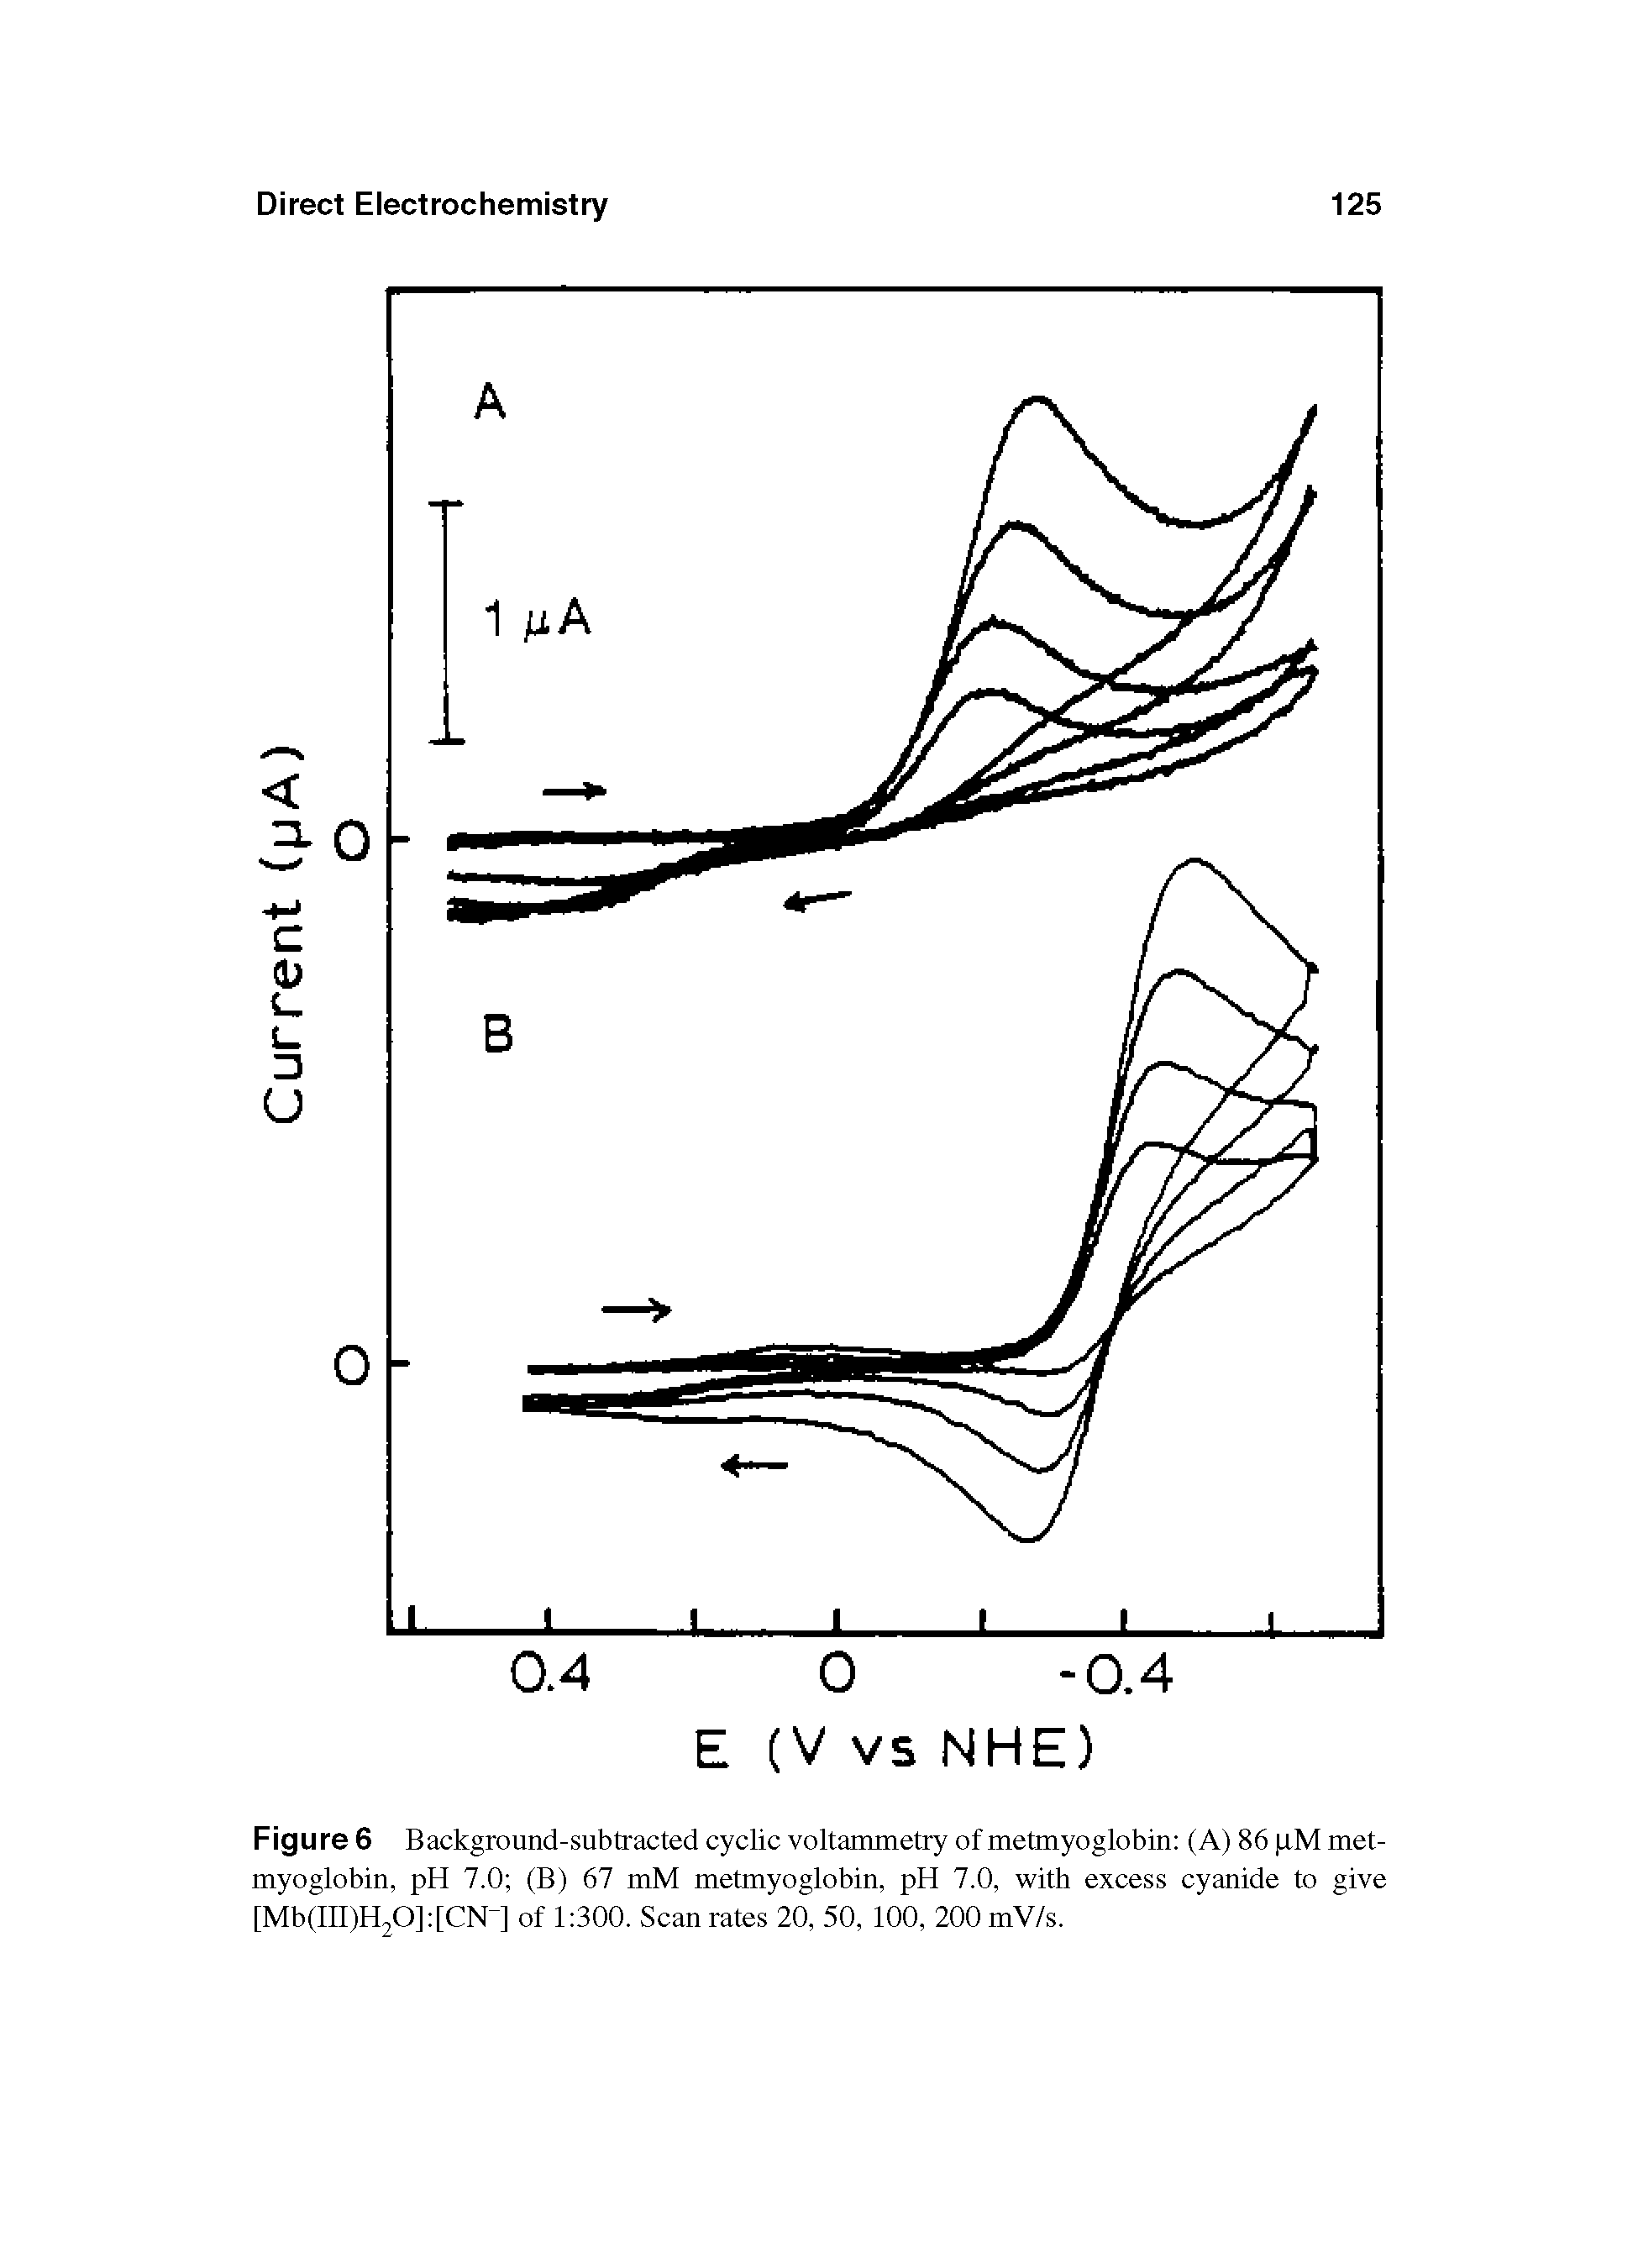 Figure 6 Background-subtracted cyclic voltammetry of metmyoglobin (A) 86 J,M met-myoglobin, pH 7.0 (B) 67 mM metmyoglobin, pH 7.0, with excess cyanide to give [Mb(III)Hp] [CN-] of 1 300. Scan rates 20, 50, 100, 200 mV/s.